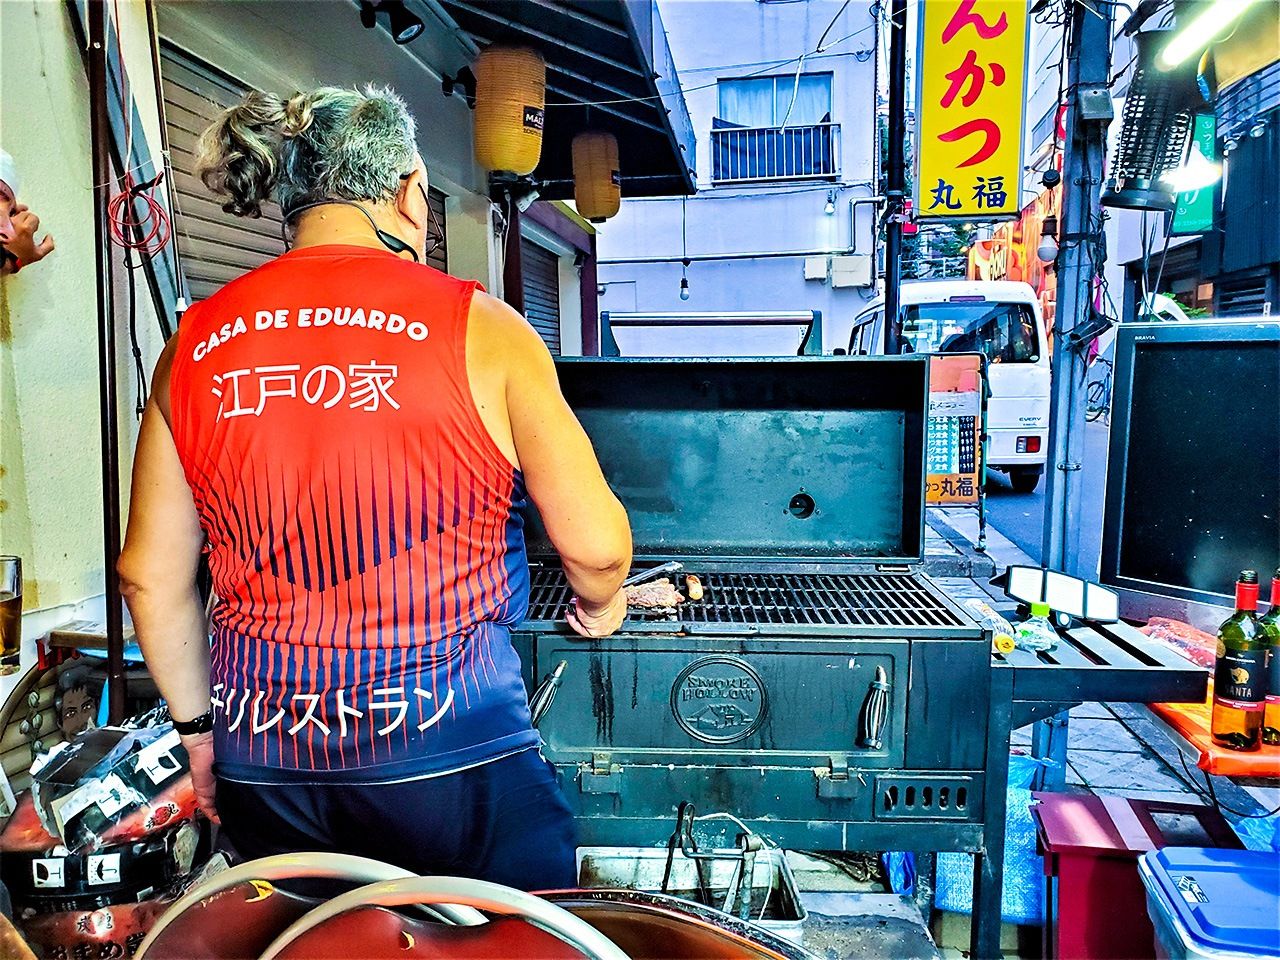 Eduardo grilling asado on a barbecue outside his restaurant. (© Kumazaki Takashi)